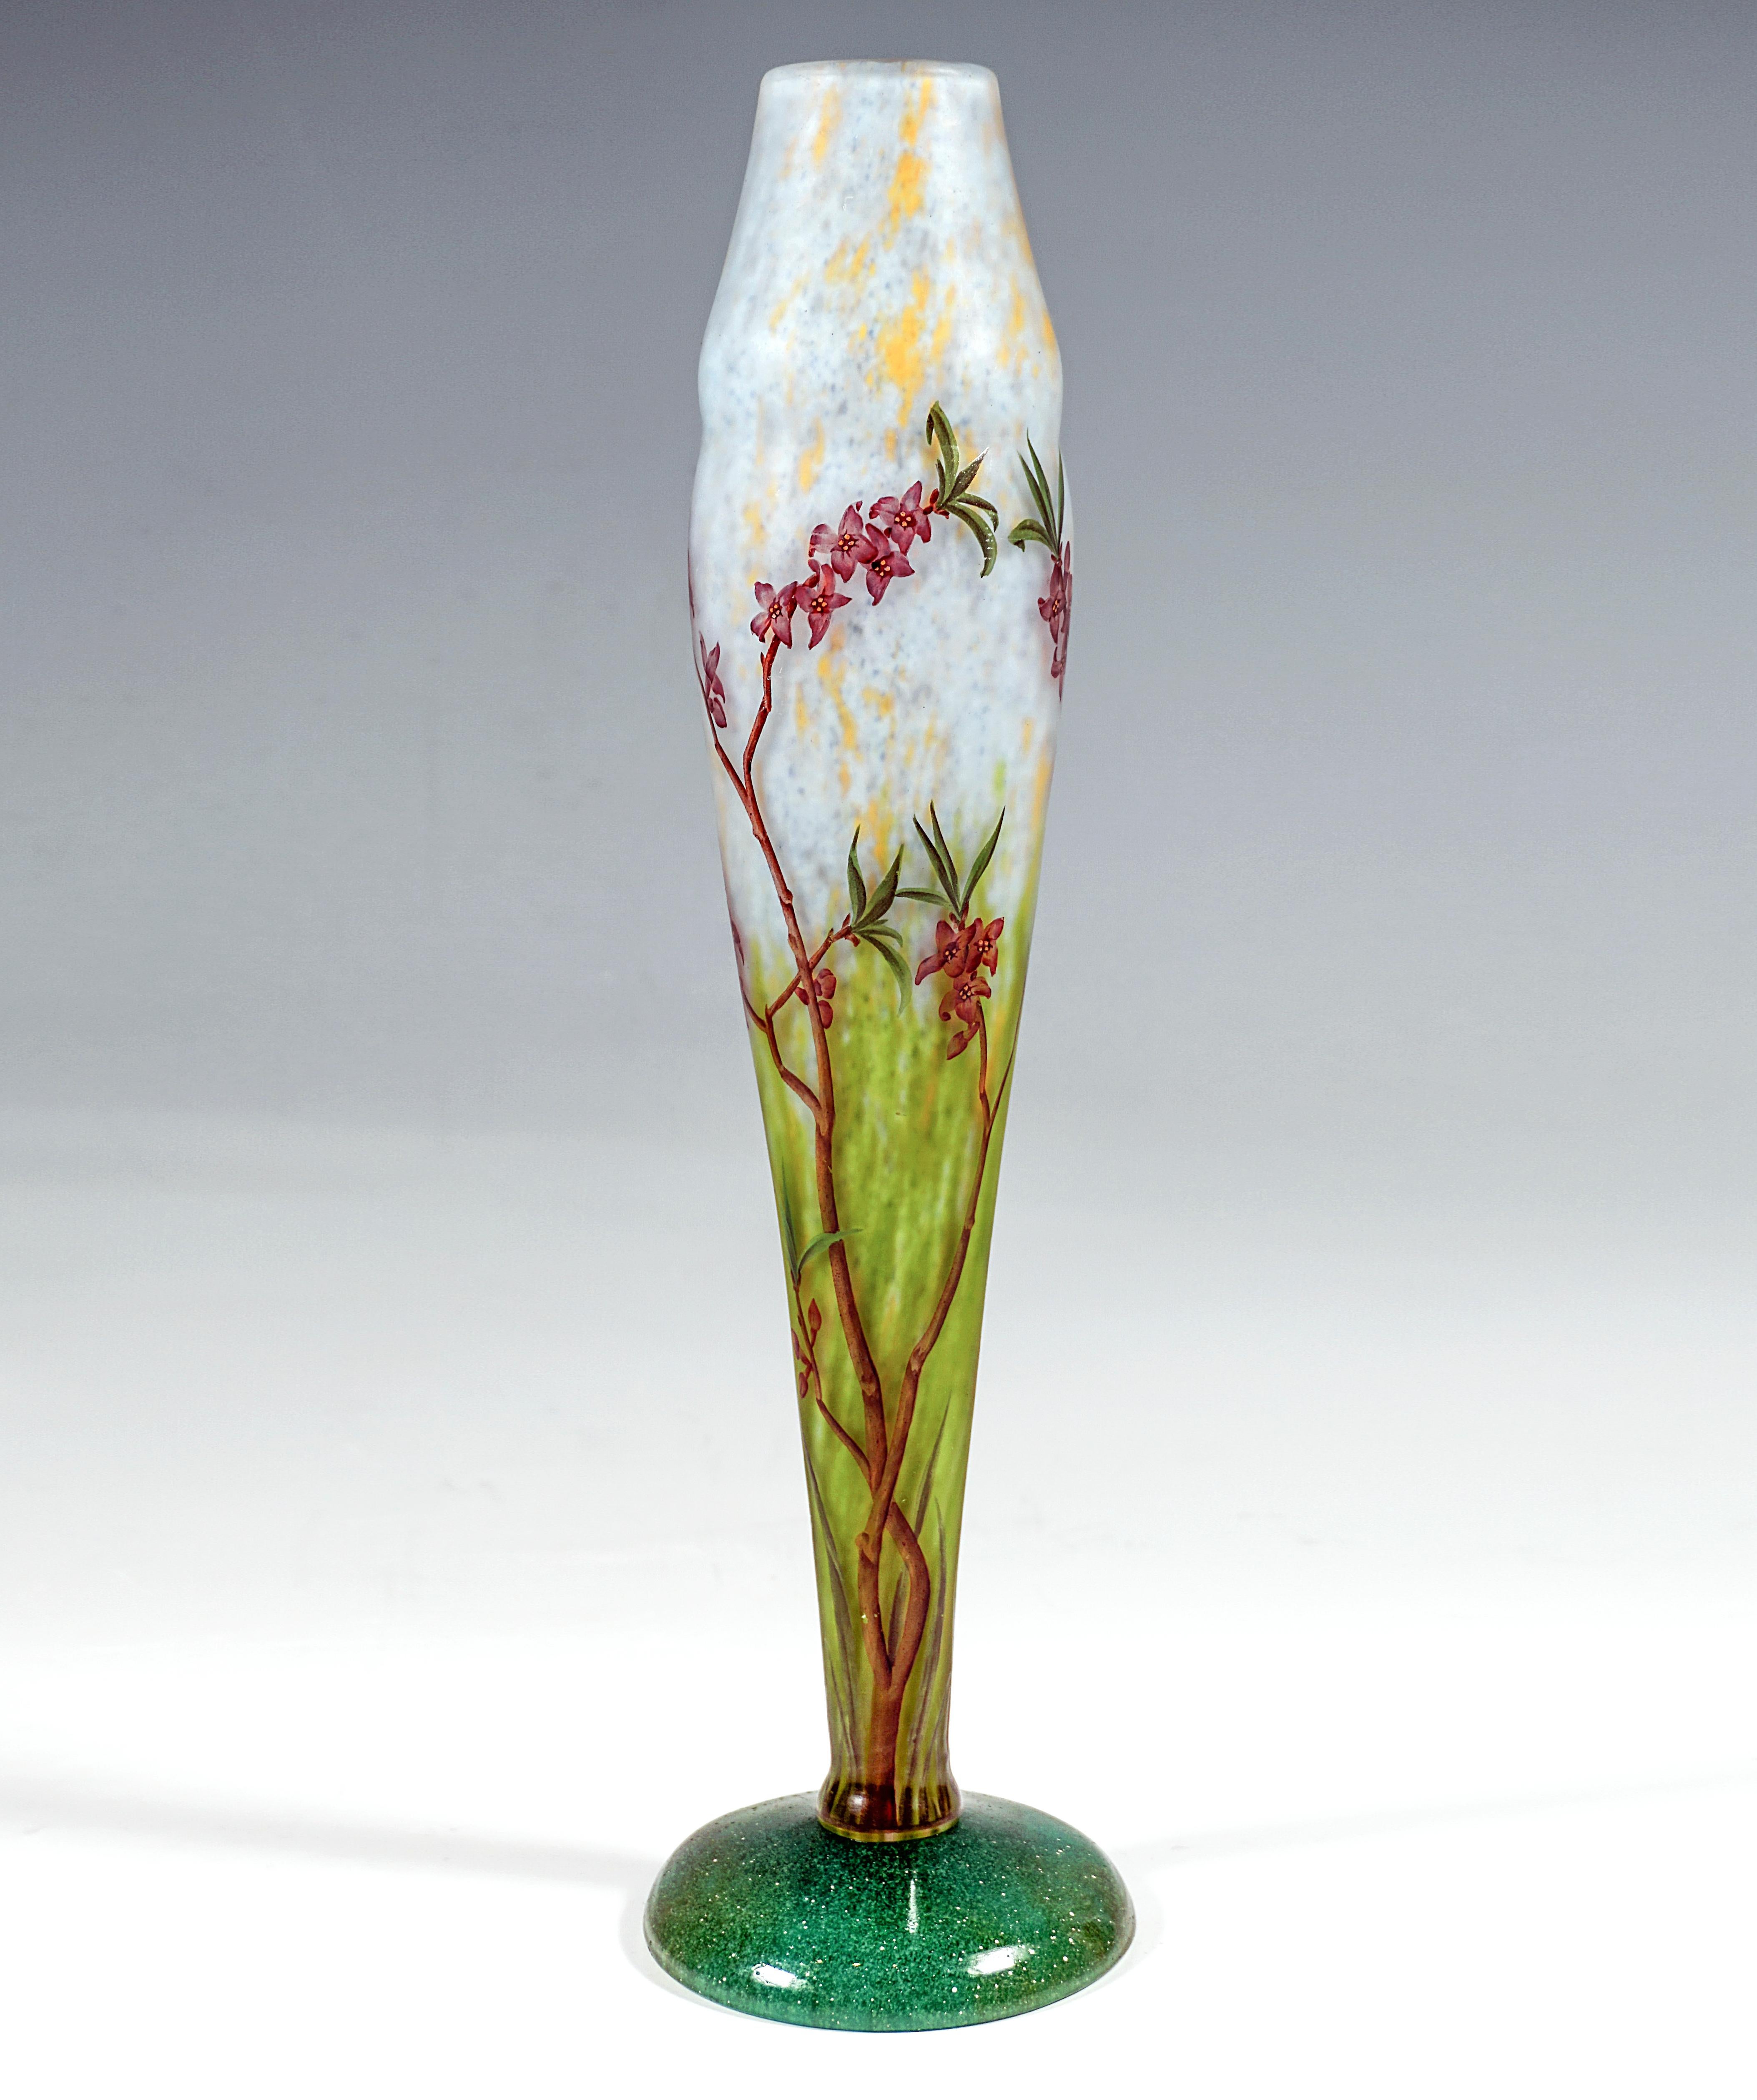 French Art Nouveau Vase with Delicate Flower Branches Decor, Daum Nancy, France, c 1910 For Sale